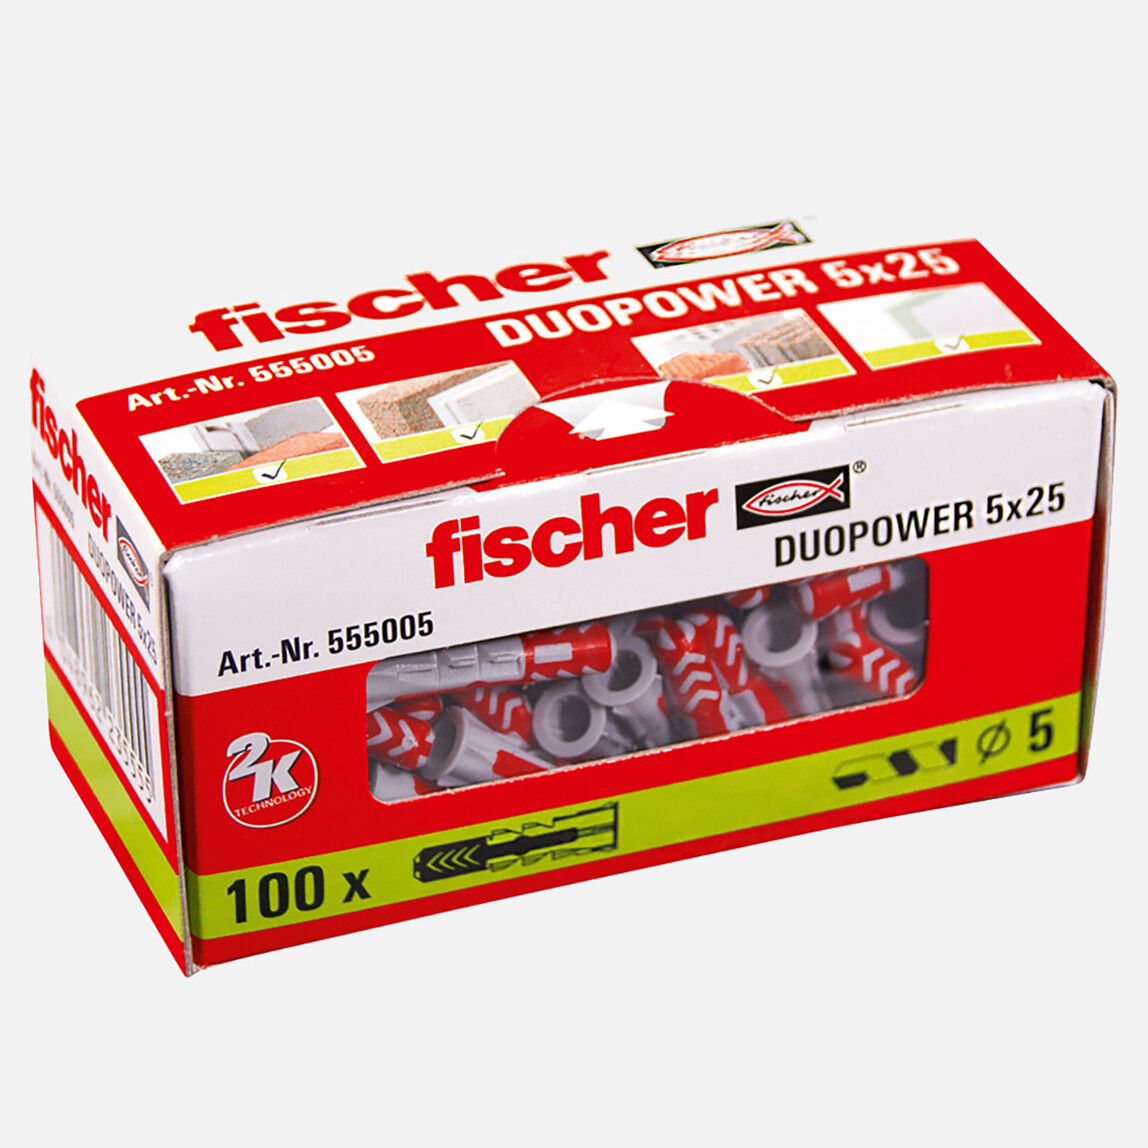    Fischer Duopower 5x25 Dübel 100 adet    